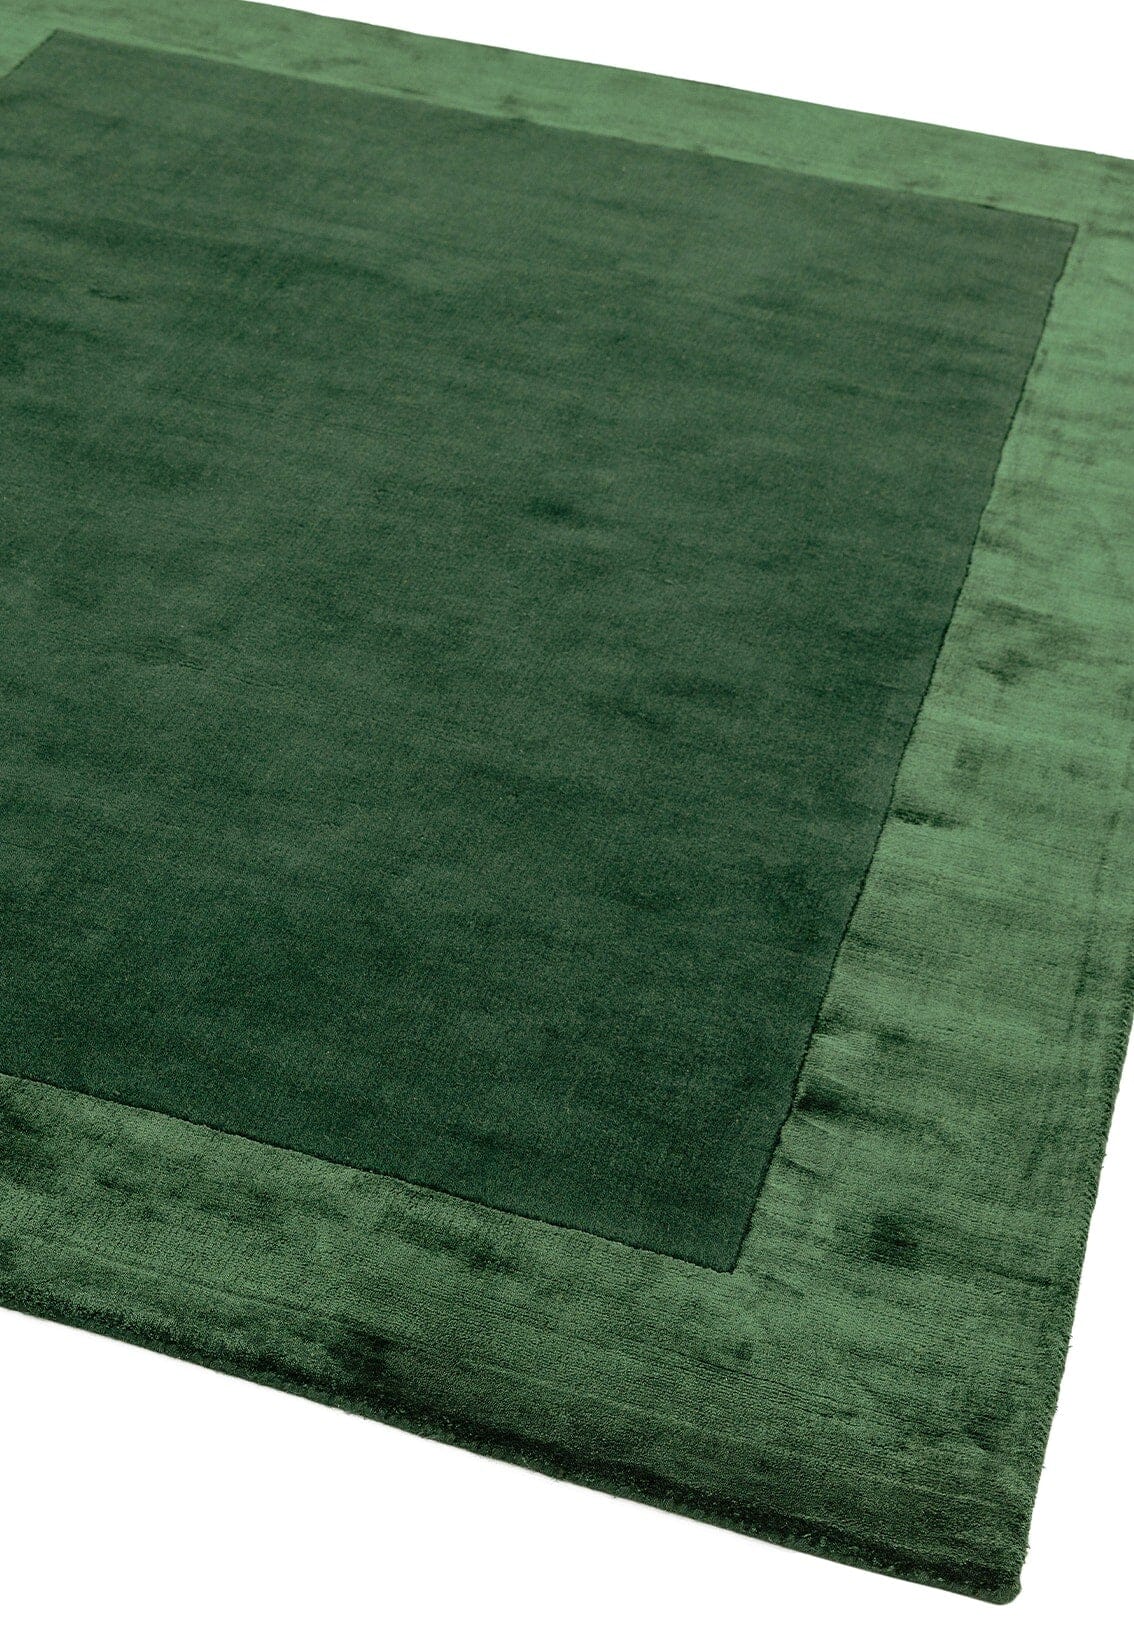  Asiatic Carpets-Asiatic Carpets Ascot Hand Woven Rug Green - 200 x 290cm-Green 909 